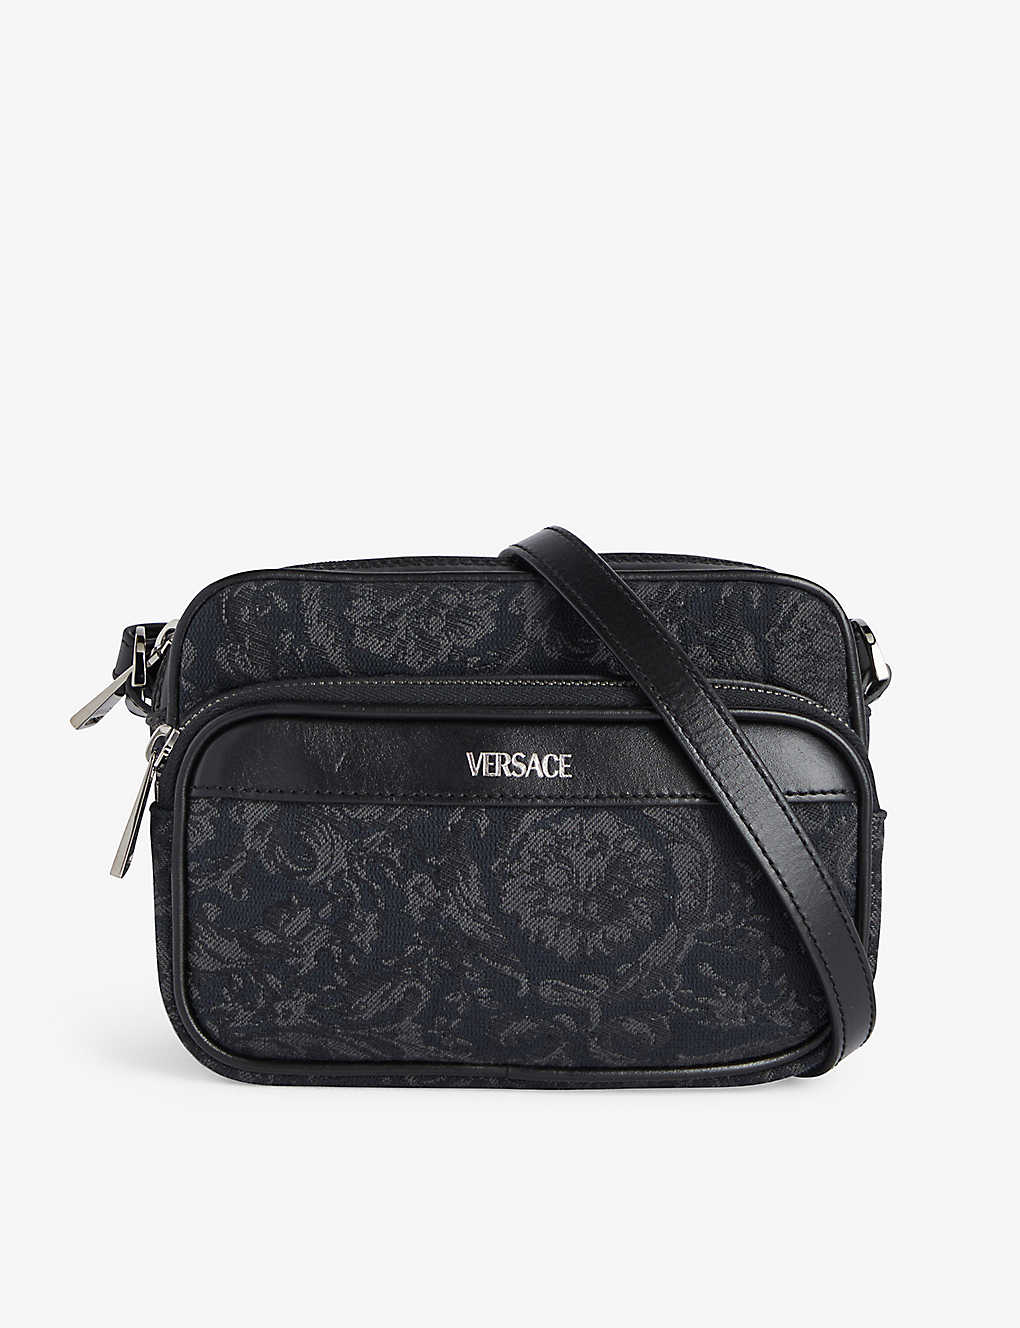 Versace Black Ruthenium Foiled-branding Canvas Shoulder Bag